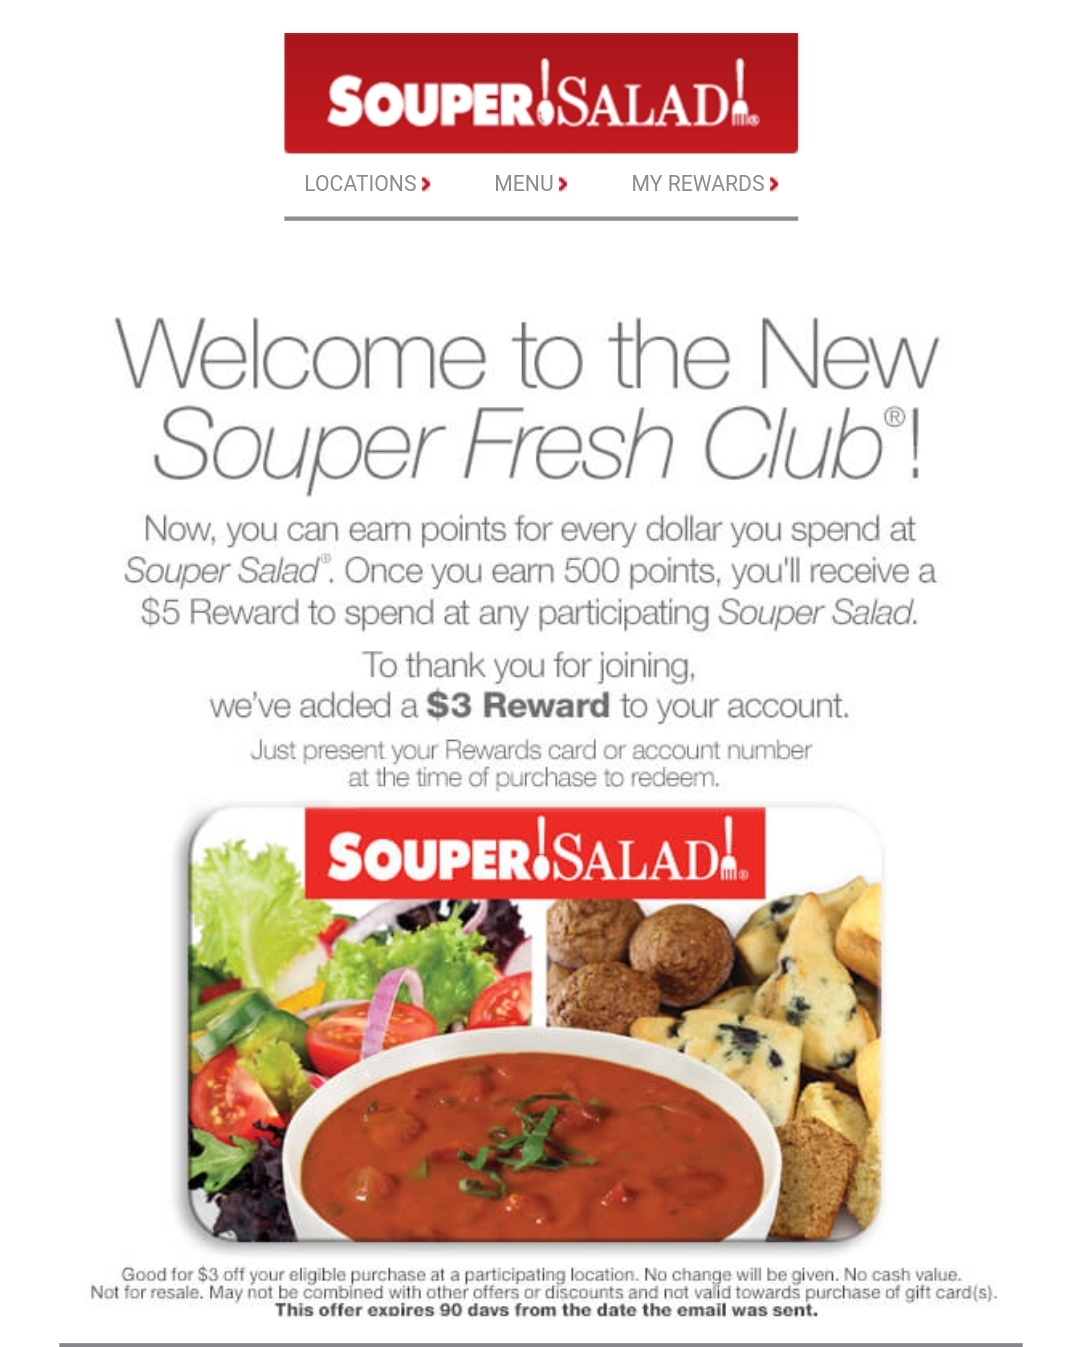 Souper Fresh Club at SOUPER Salads - earn rewards!